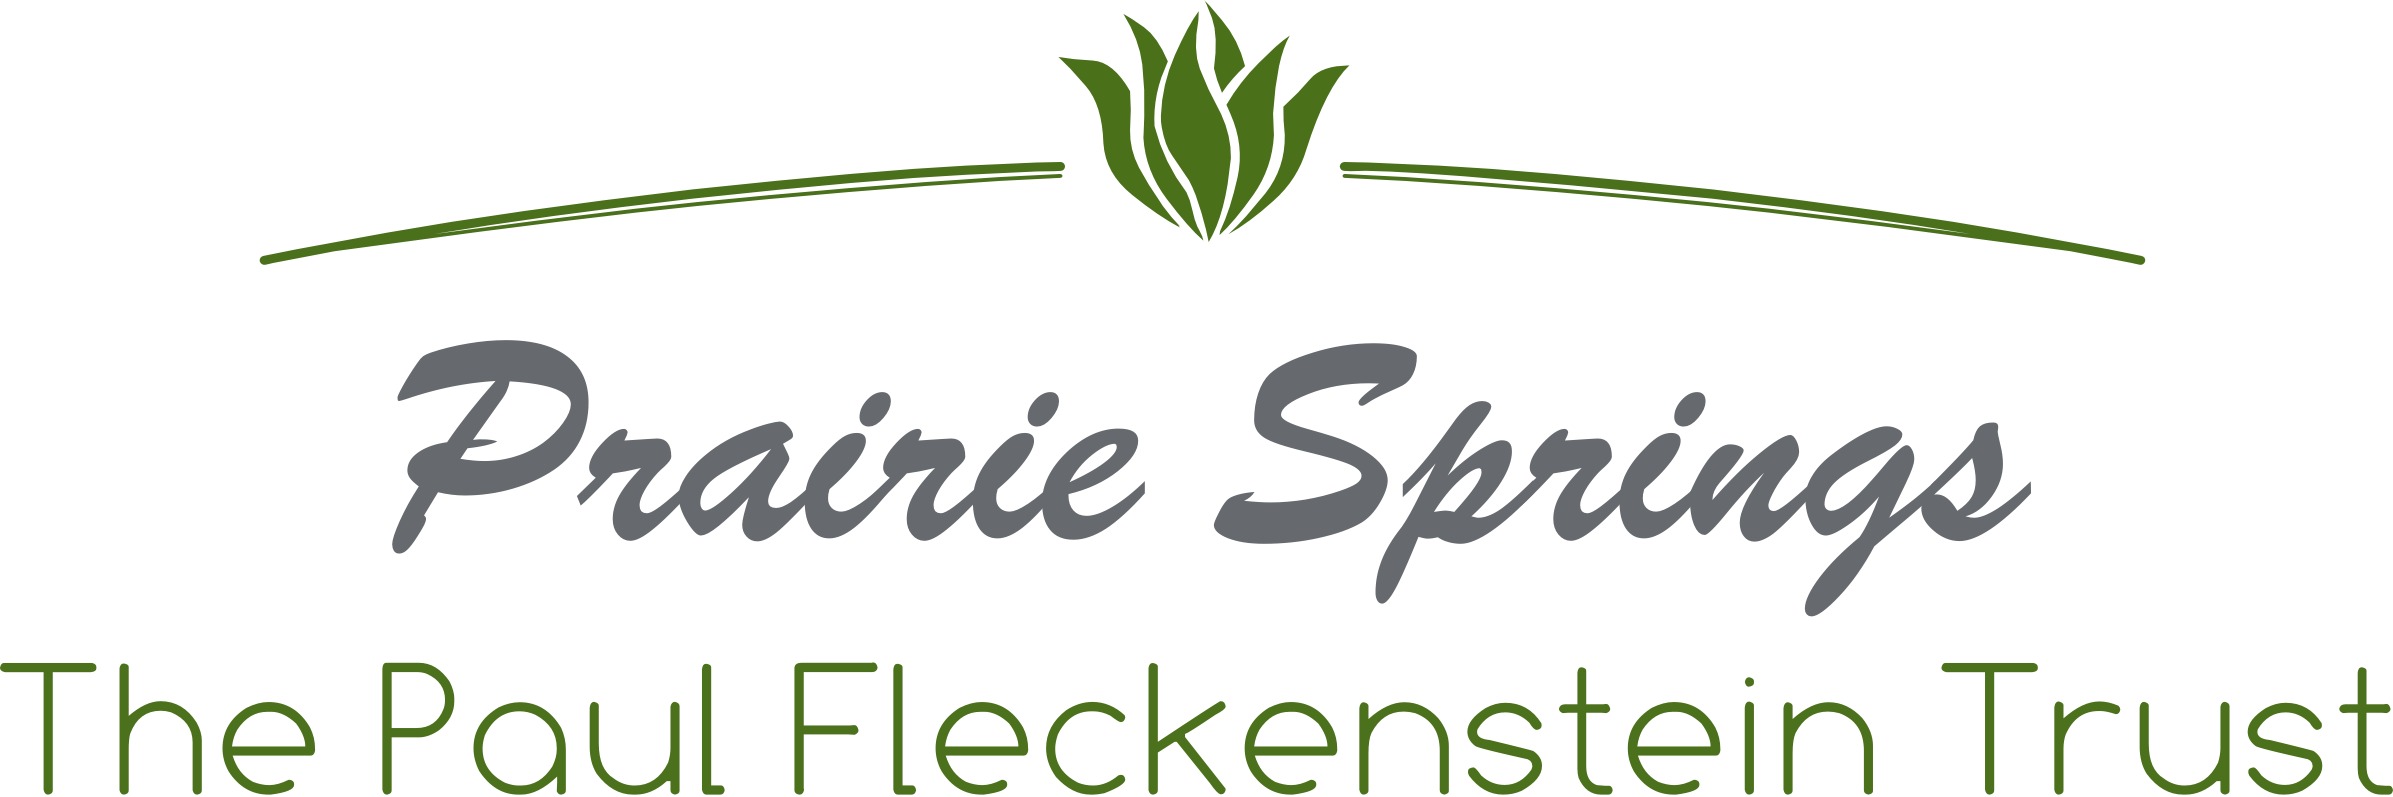 Prairie Springs: The Paul Fleckenstein Charitable Trust 